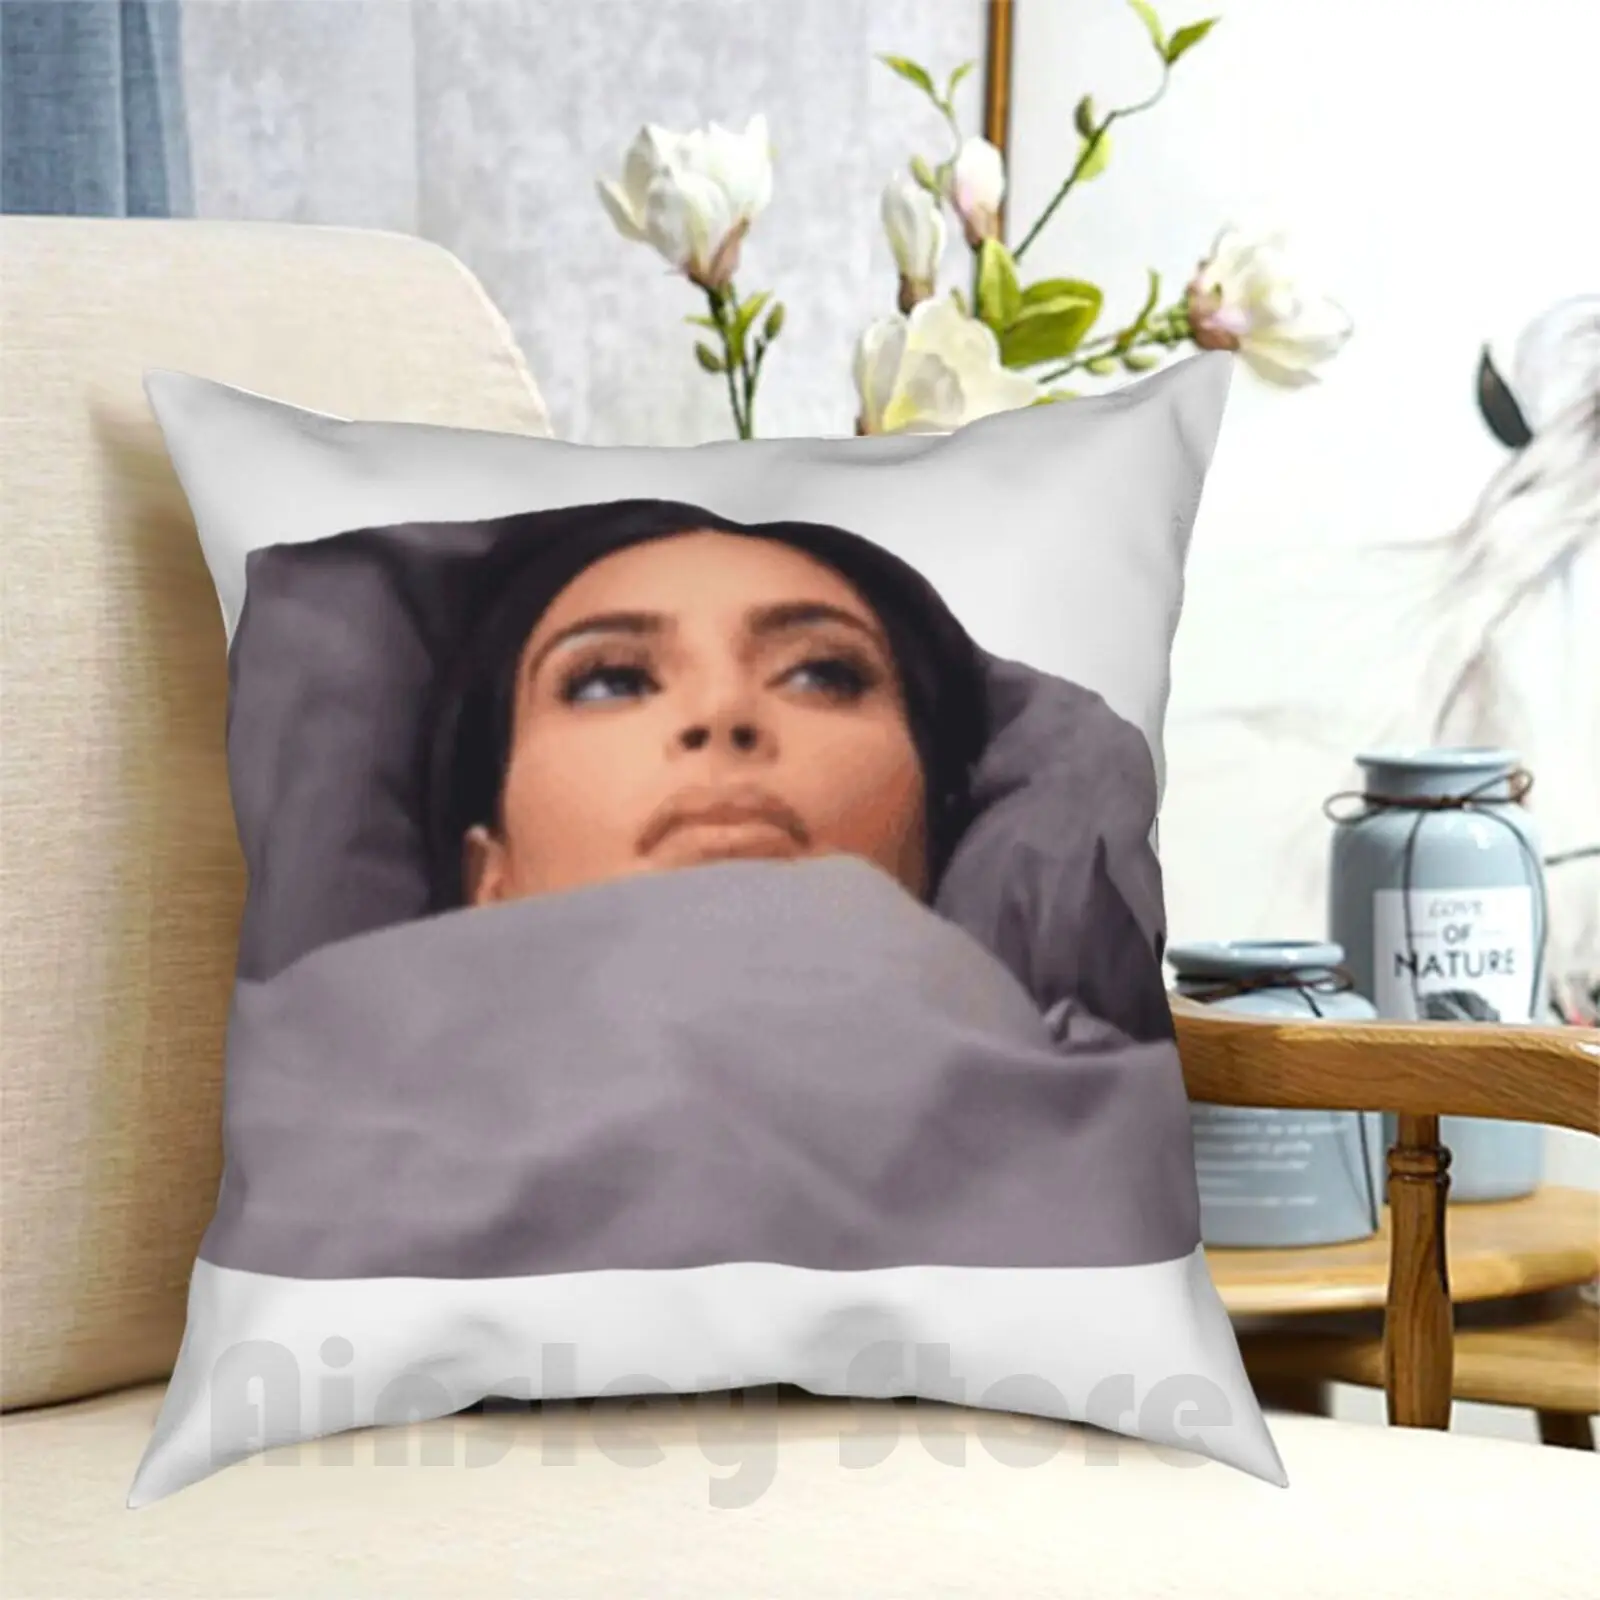 

Pillow Case Printed Home Soft DIY Pillow cover Kris Jenner Funny Meme Cute Tumblr Hipster Nerd Geek Humor Cool Popular